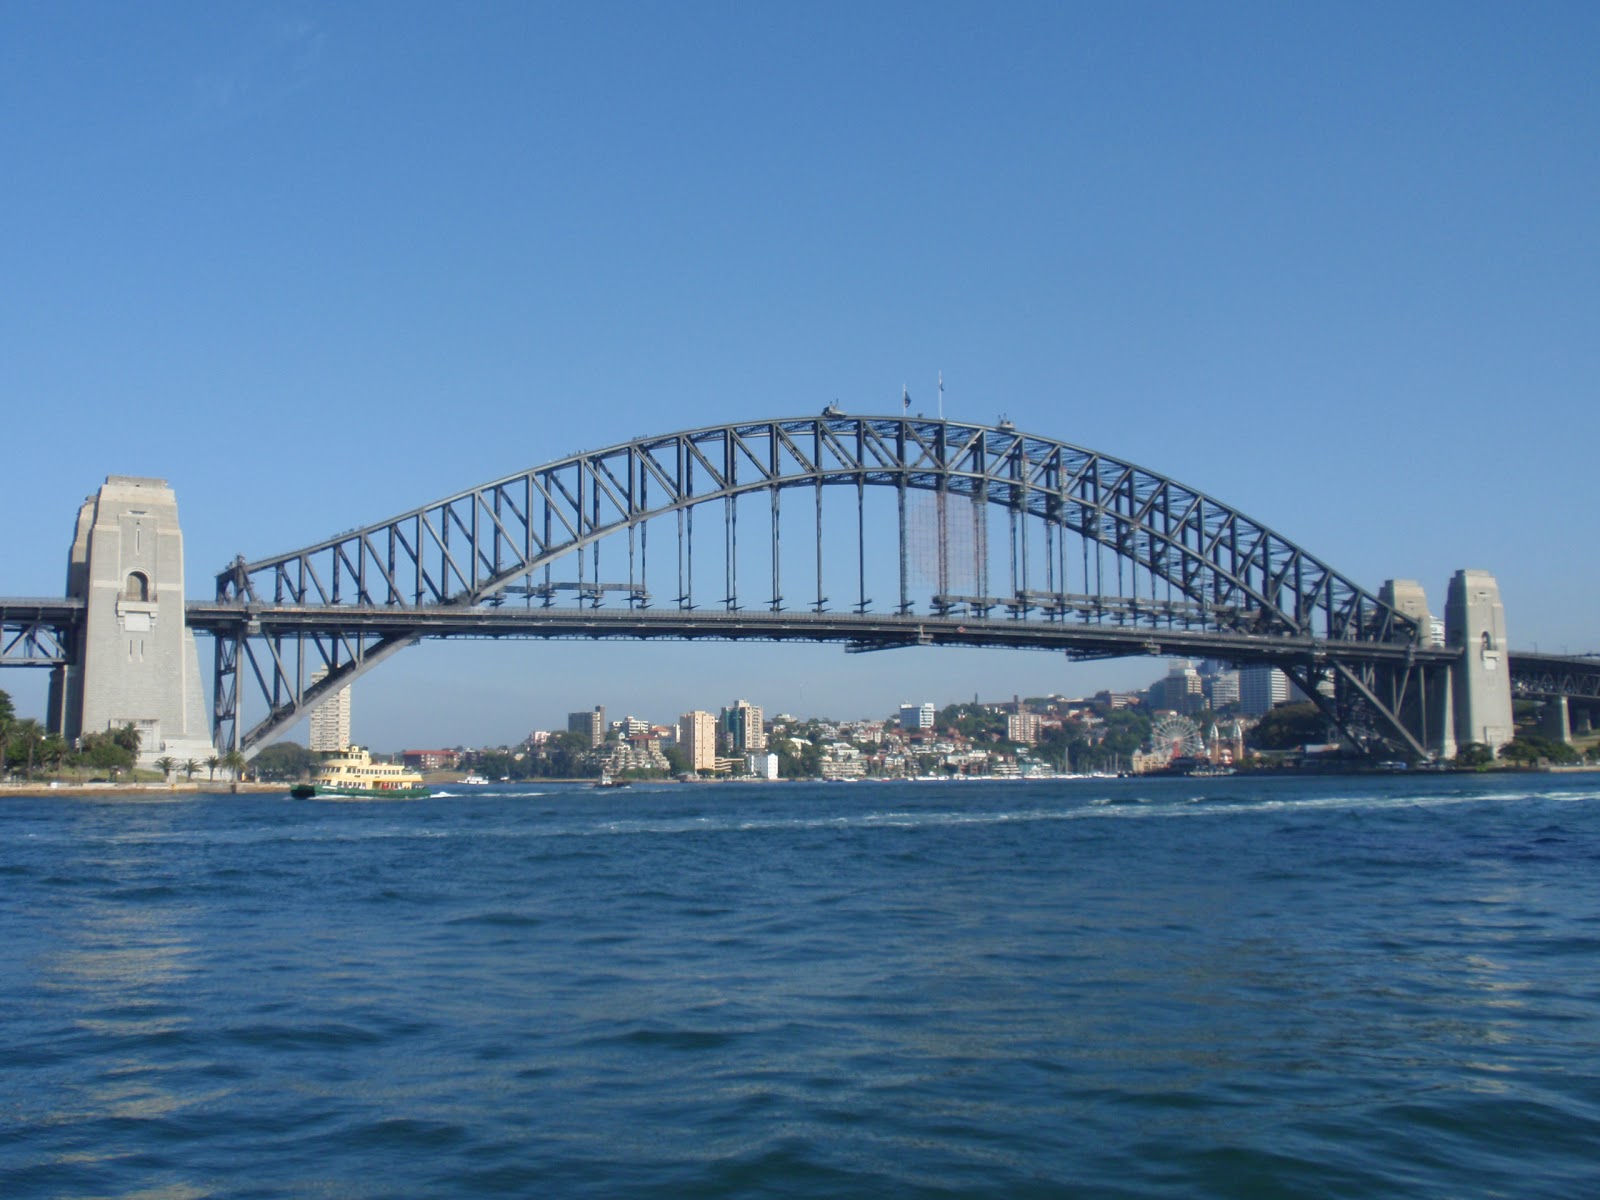 Harbour bridge. Харбор-бридж Сидней. Австралия.Сидней.мост Харбор-бридж. Сиднейский мост Харбор-бридж. Harbour Bridge Австралия.